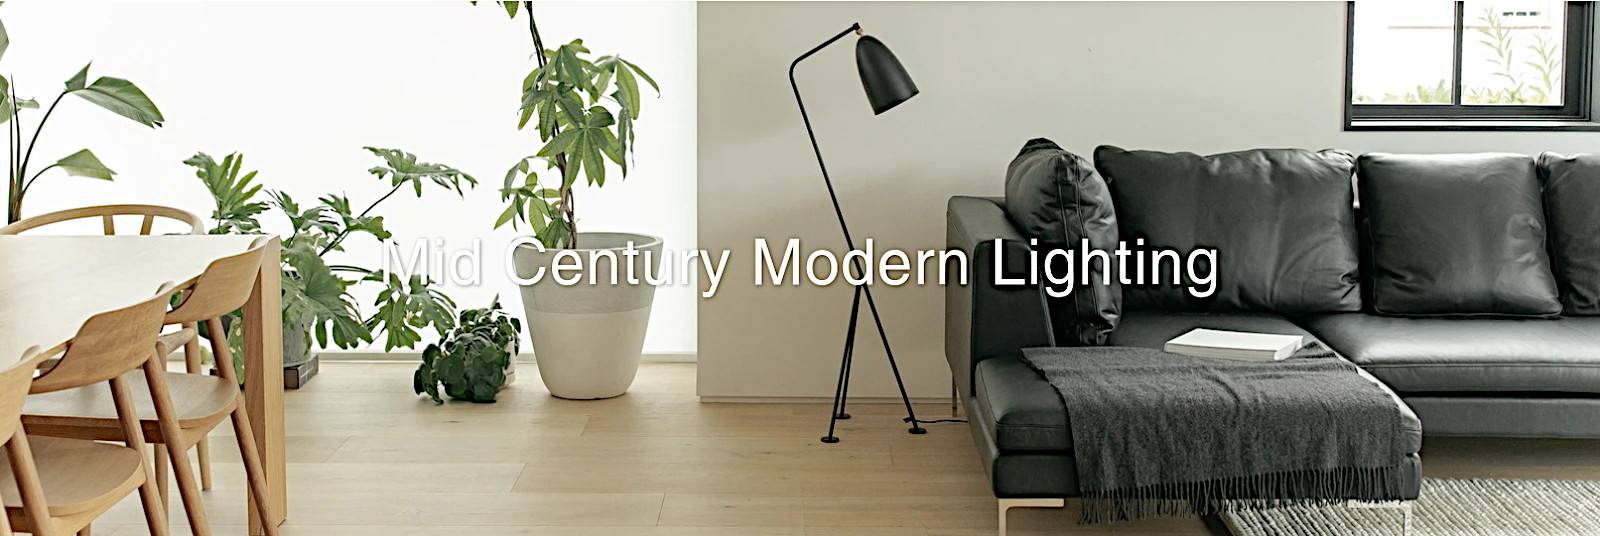 mid century modern lighting good buy